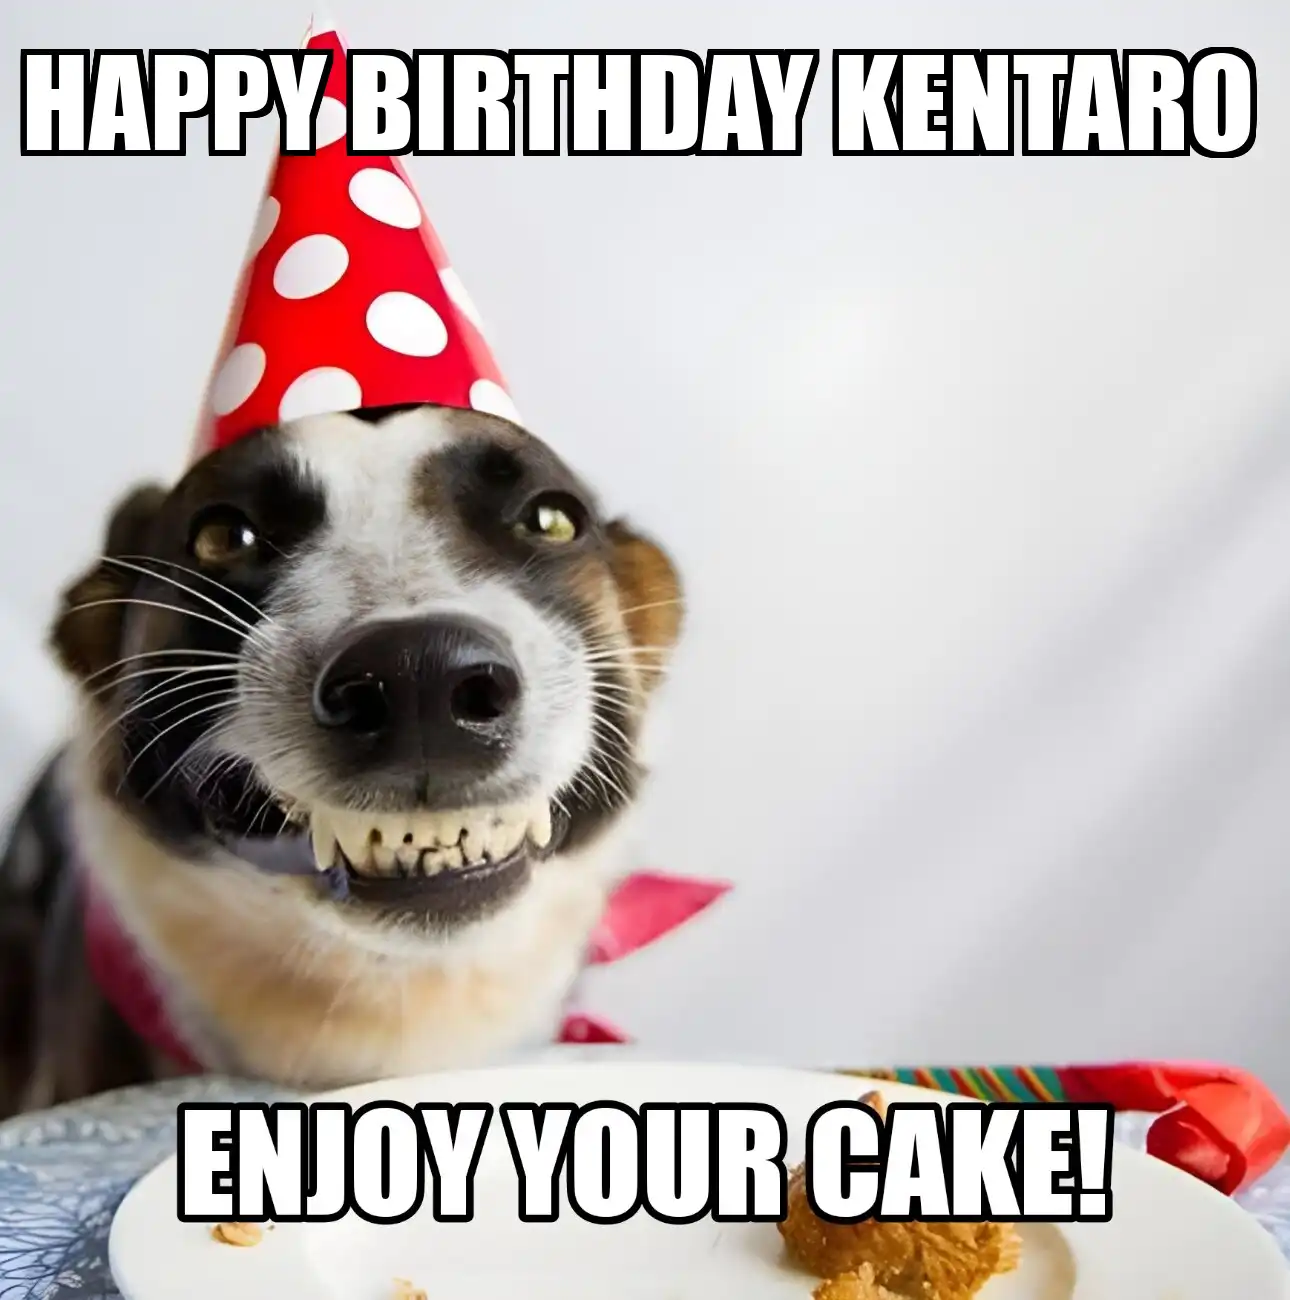 Happy Birthday Kentaro Enjoy Your Cake Dog Meme